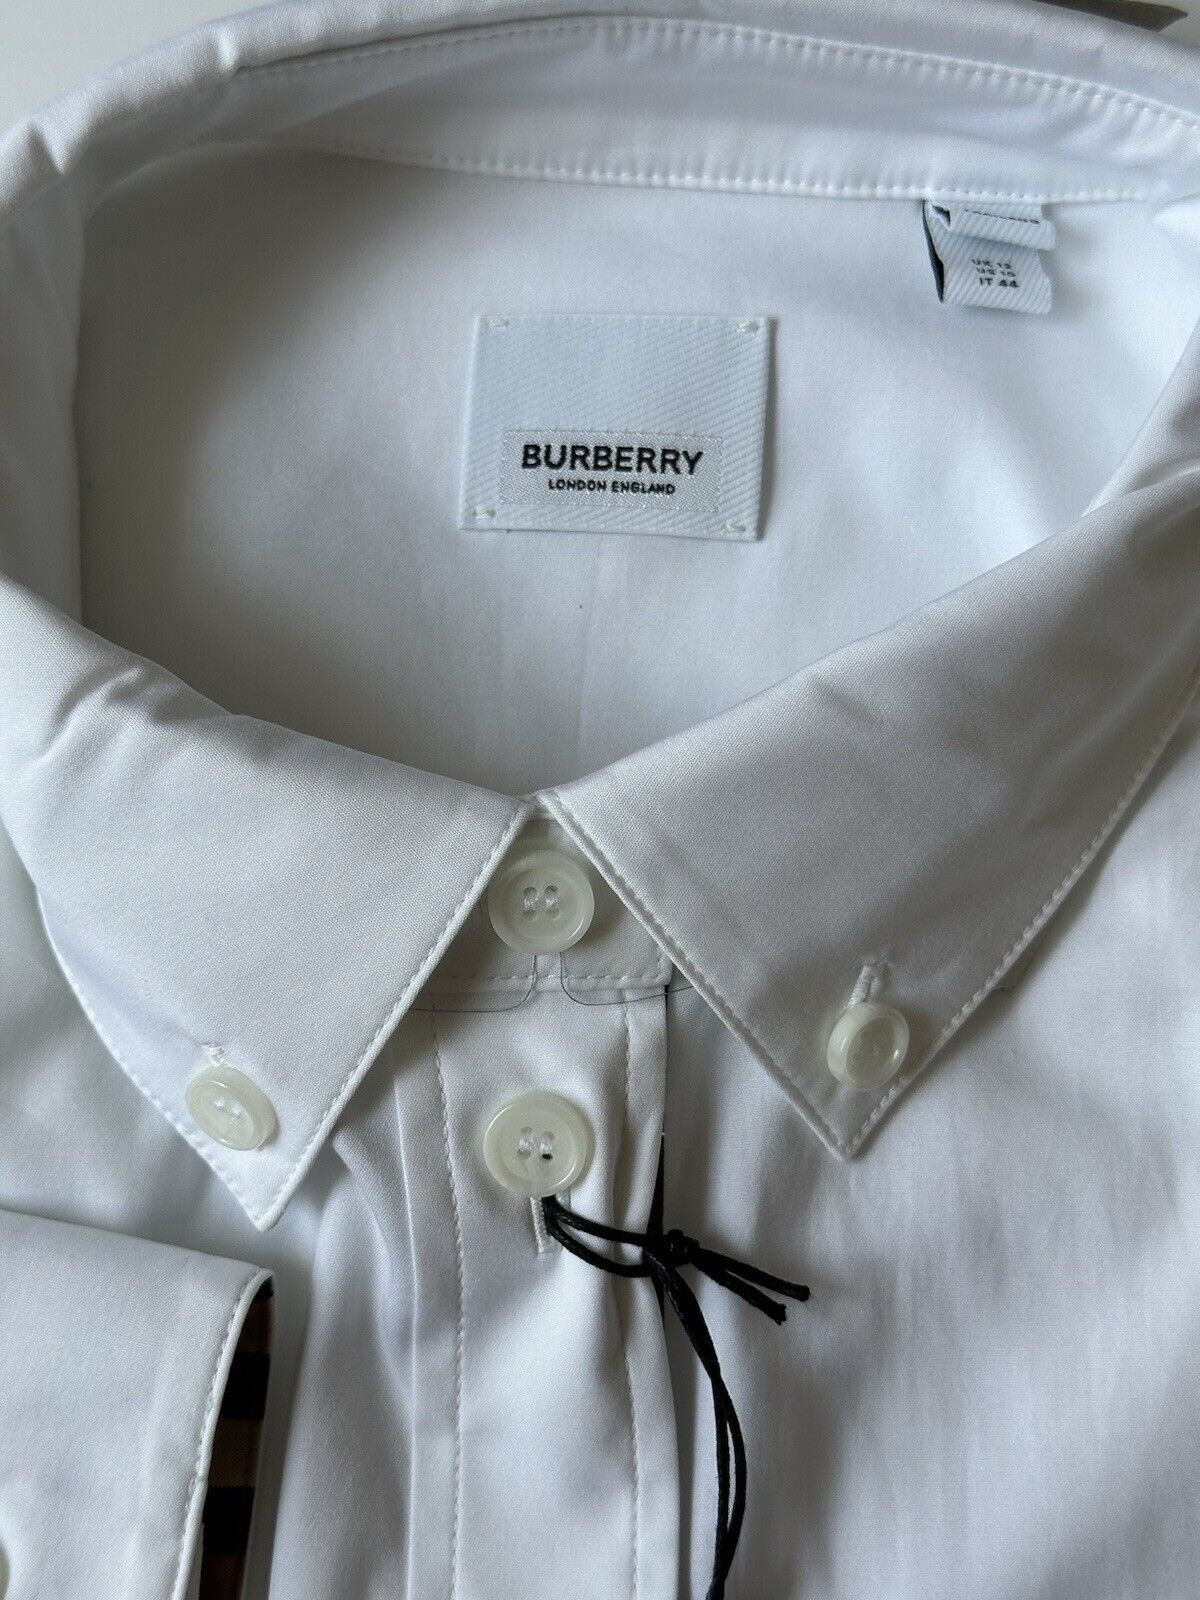 Burberry Women’s Optic White Cotton Button-Down Shirt 10 US IT 8073309 NWT $510